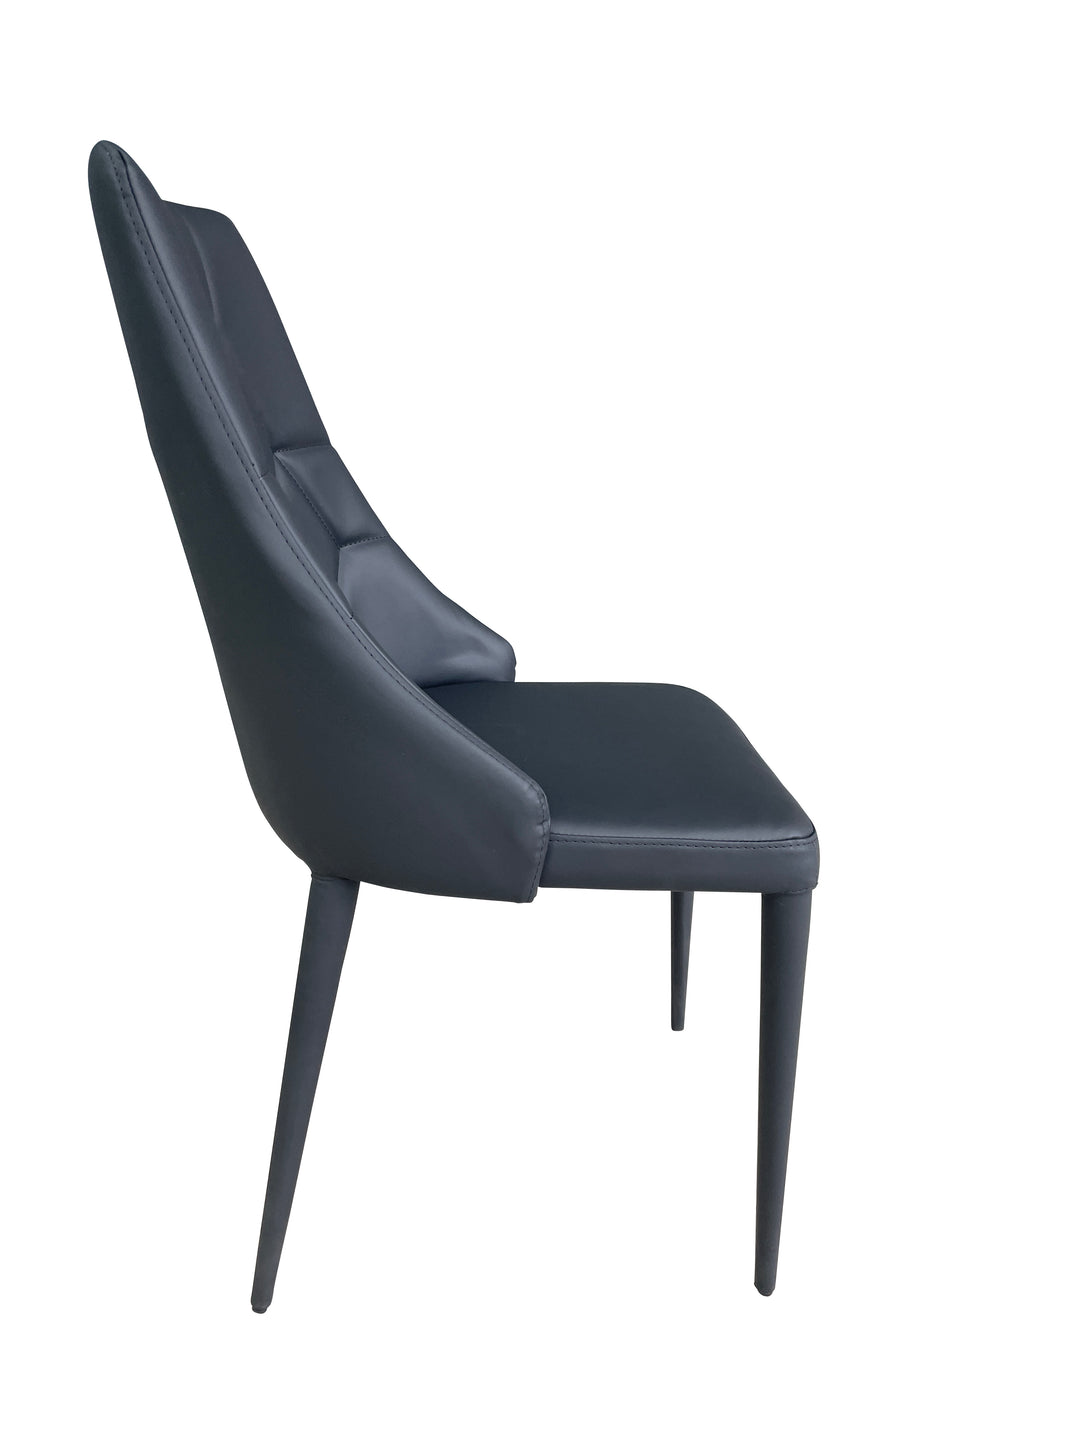 Retro Chair - Future Classics Furniture